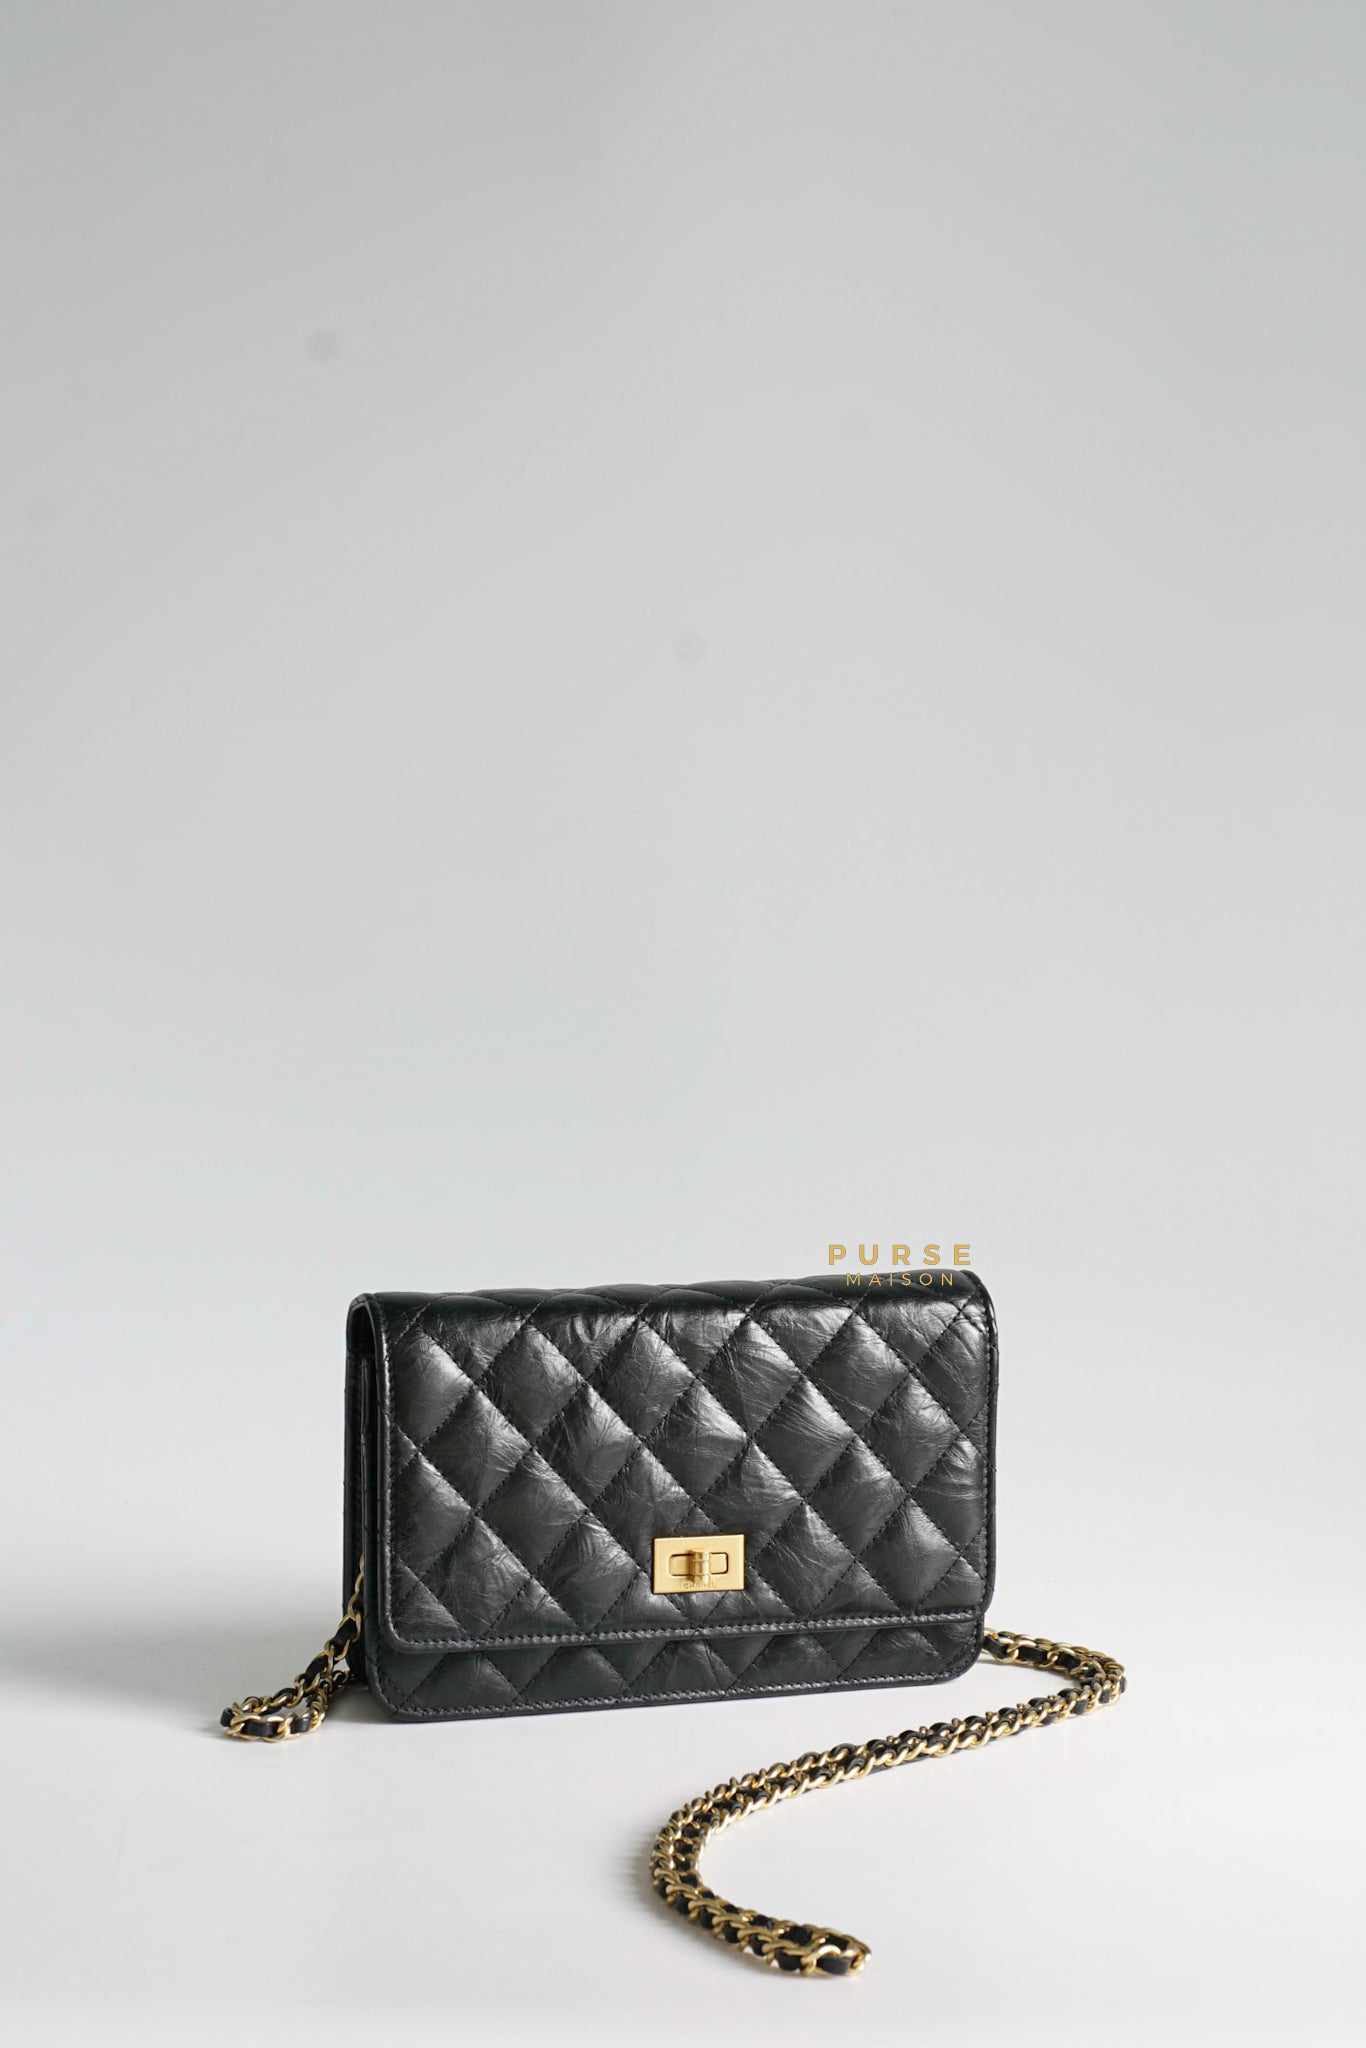 Chanel 2.55 Reissue Wallet on Chain Black Aged Calfskin 